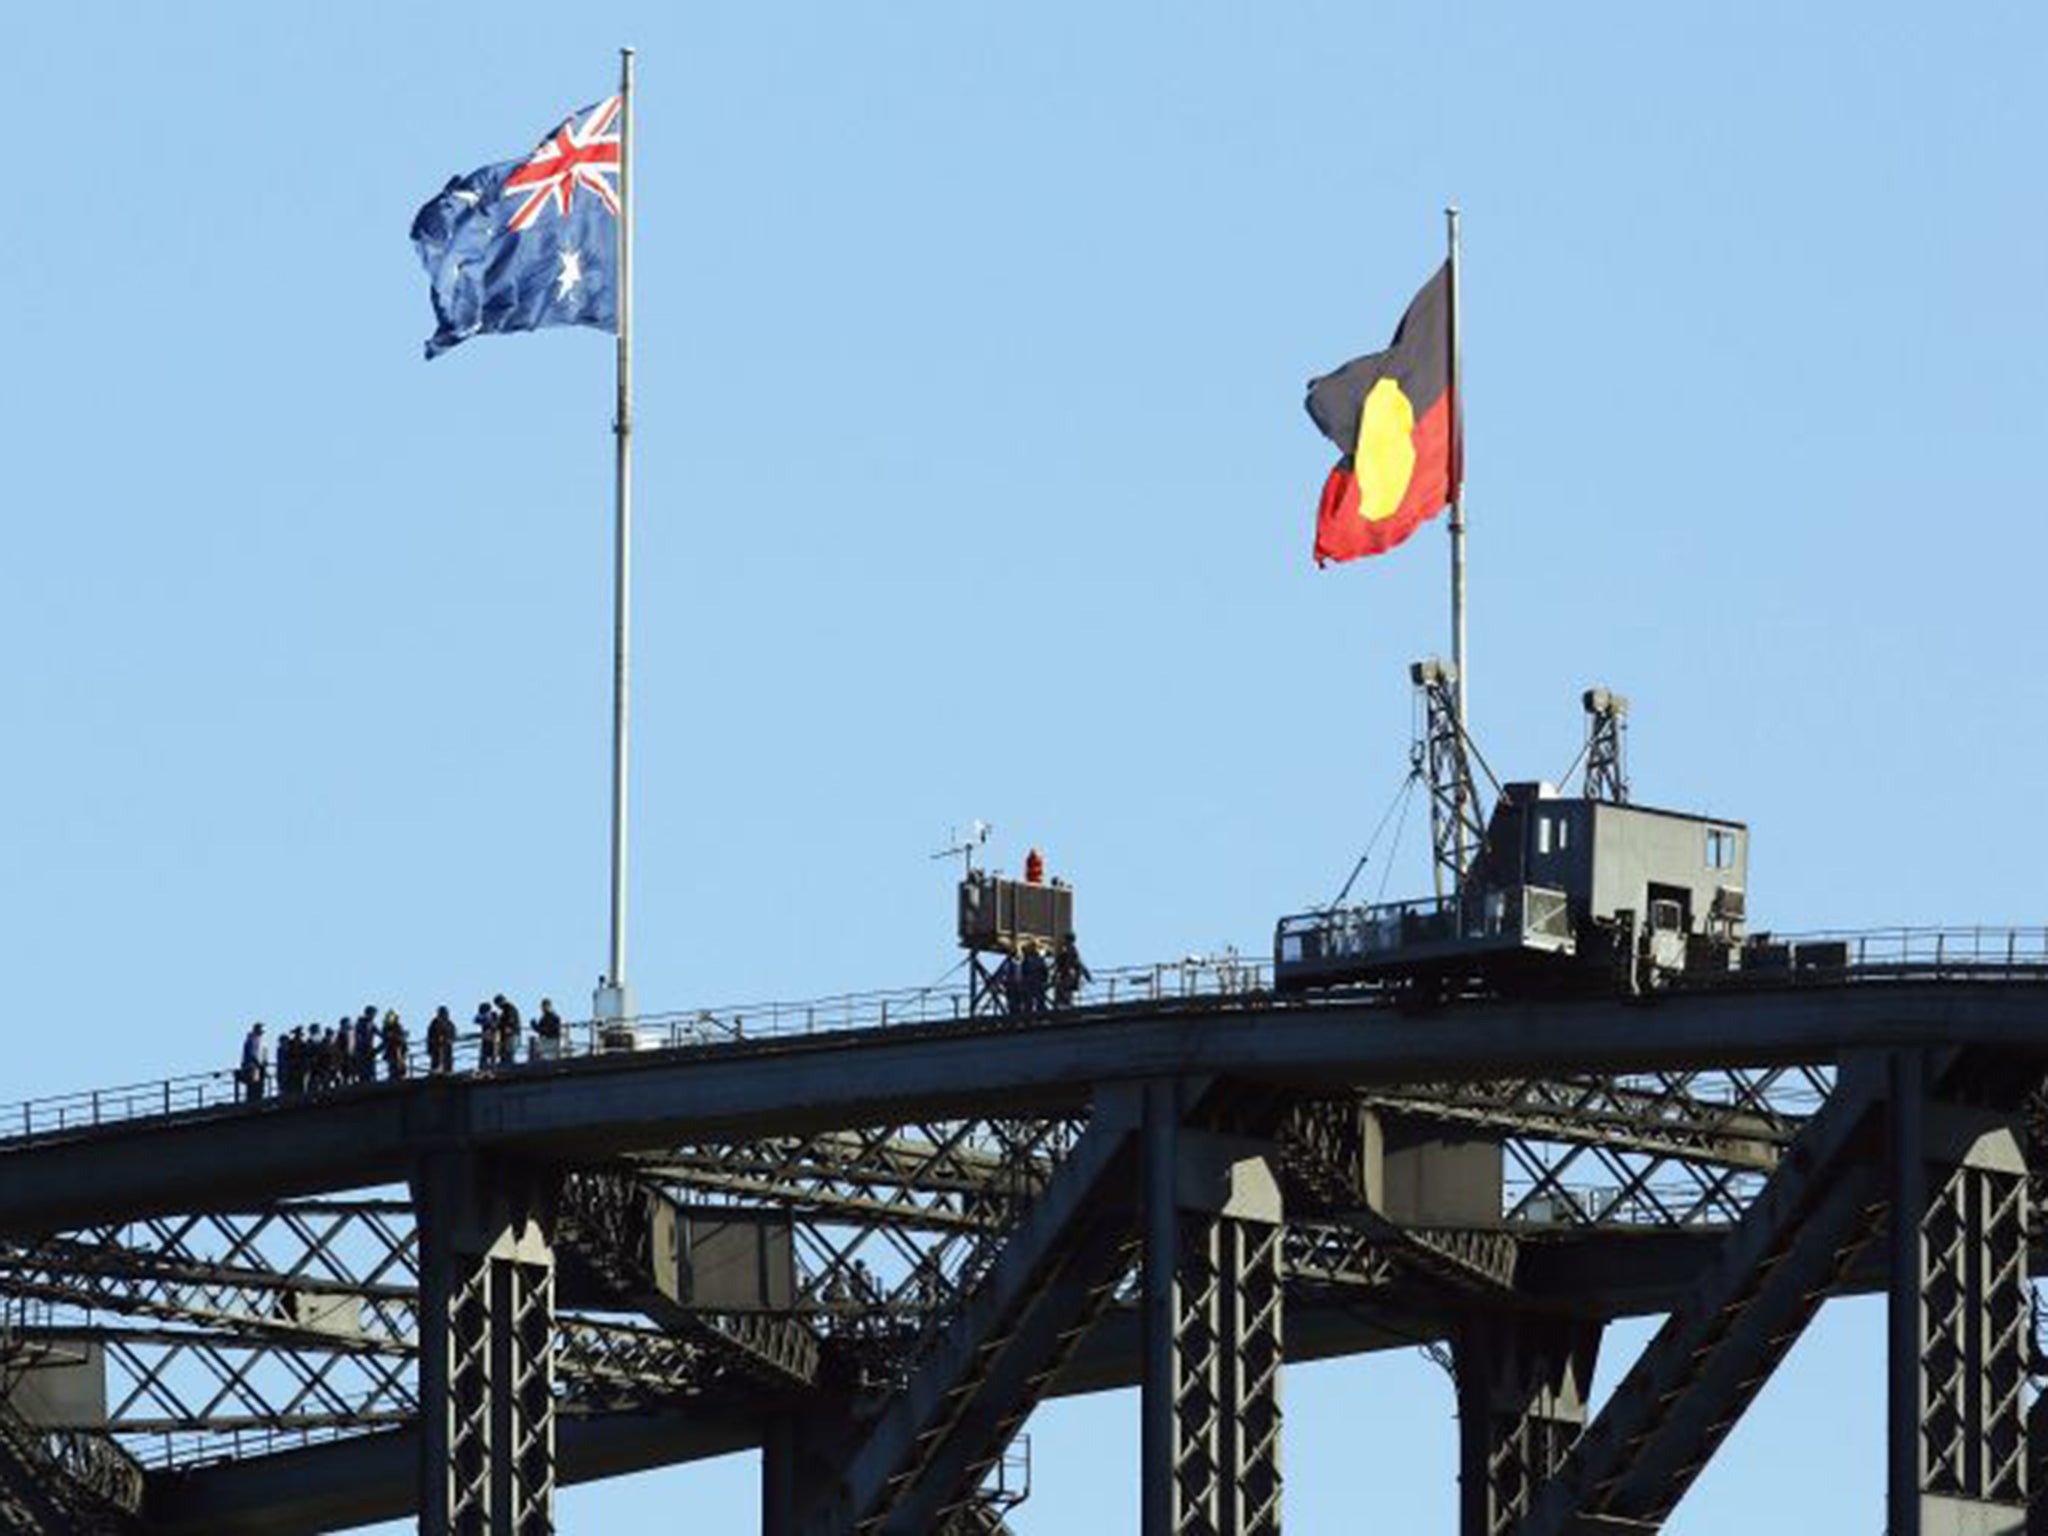 The Australian Aboriginal Flag, right, flies alongside the Australian National Flag on the top of the Sydney harbour bridge